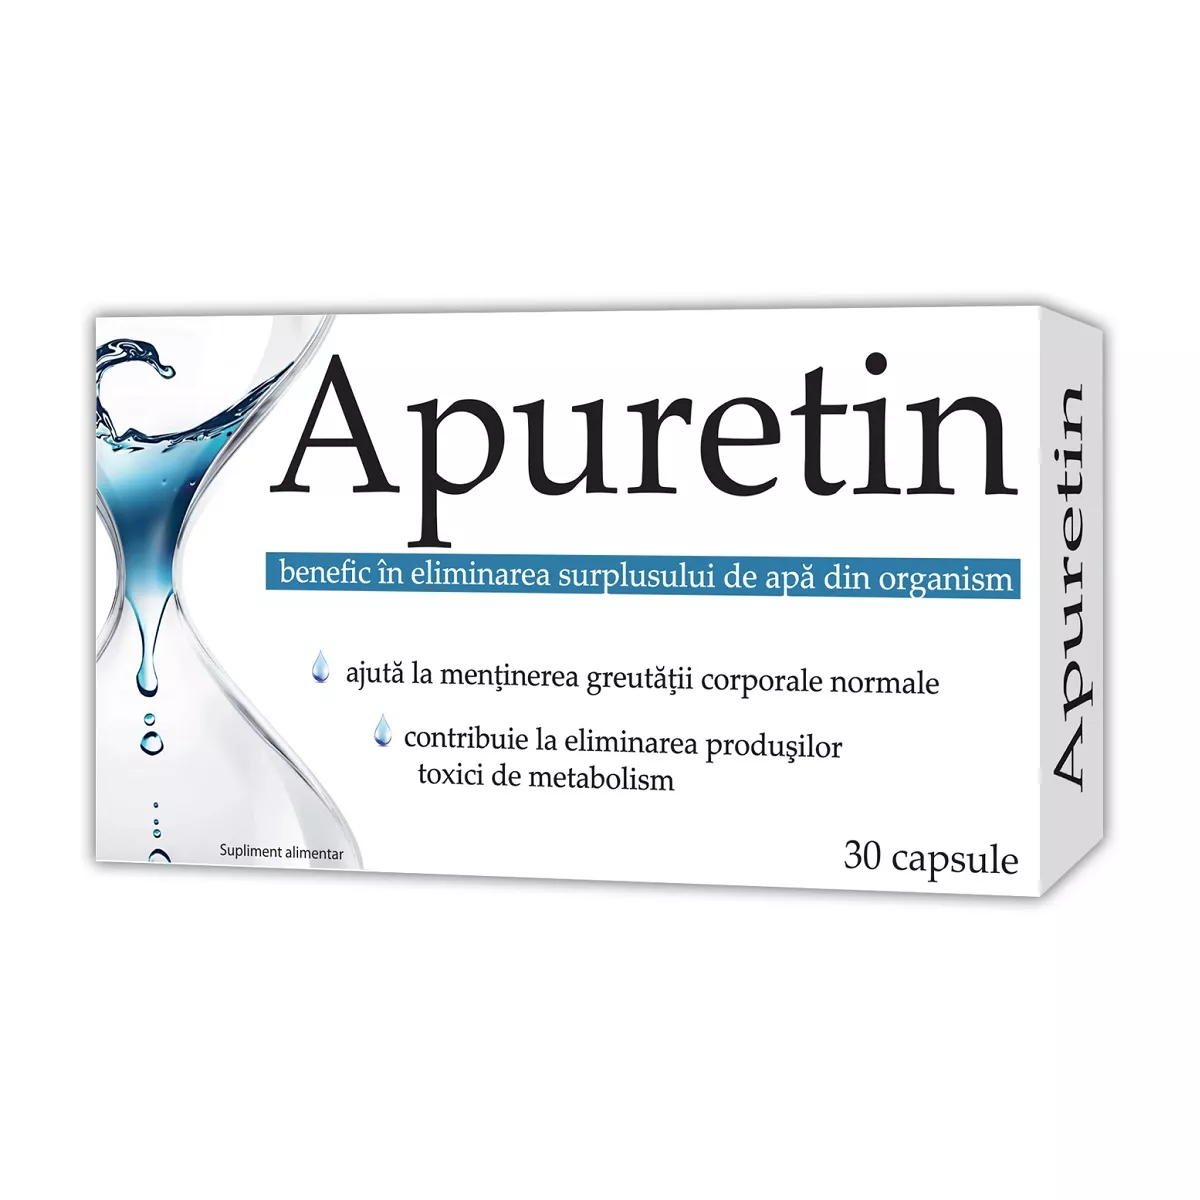 Apuretin, 30 capsule, Zdrovit, [],nordpharm.ro